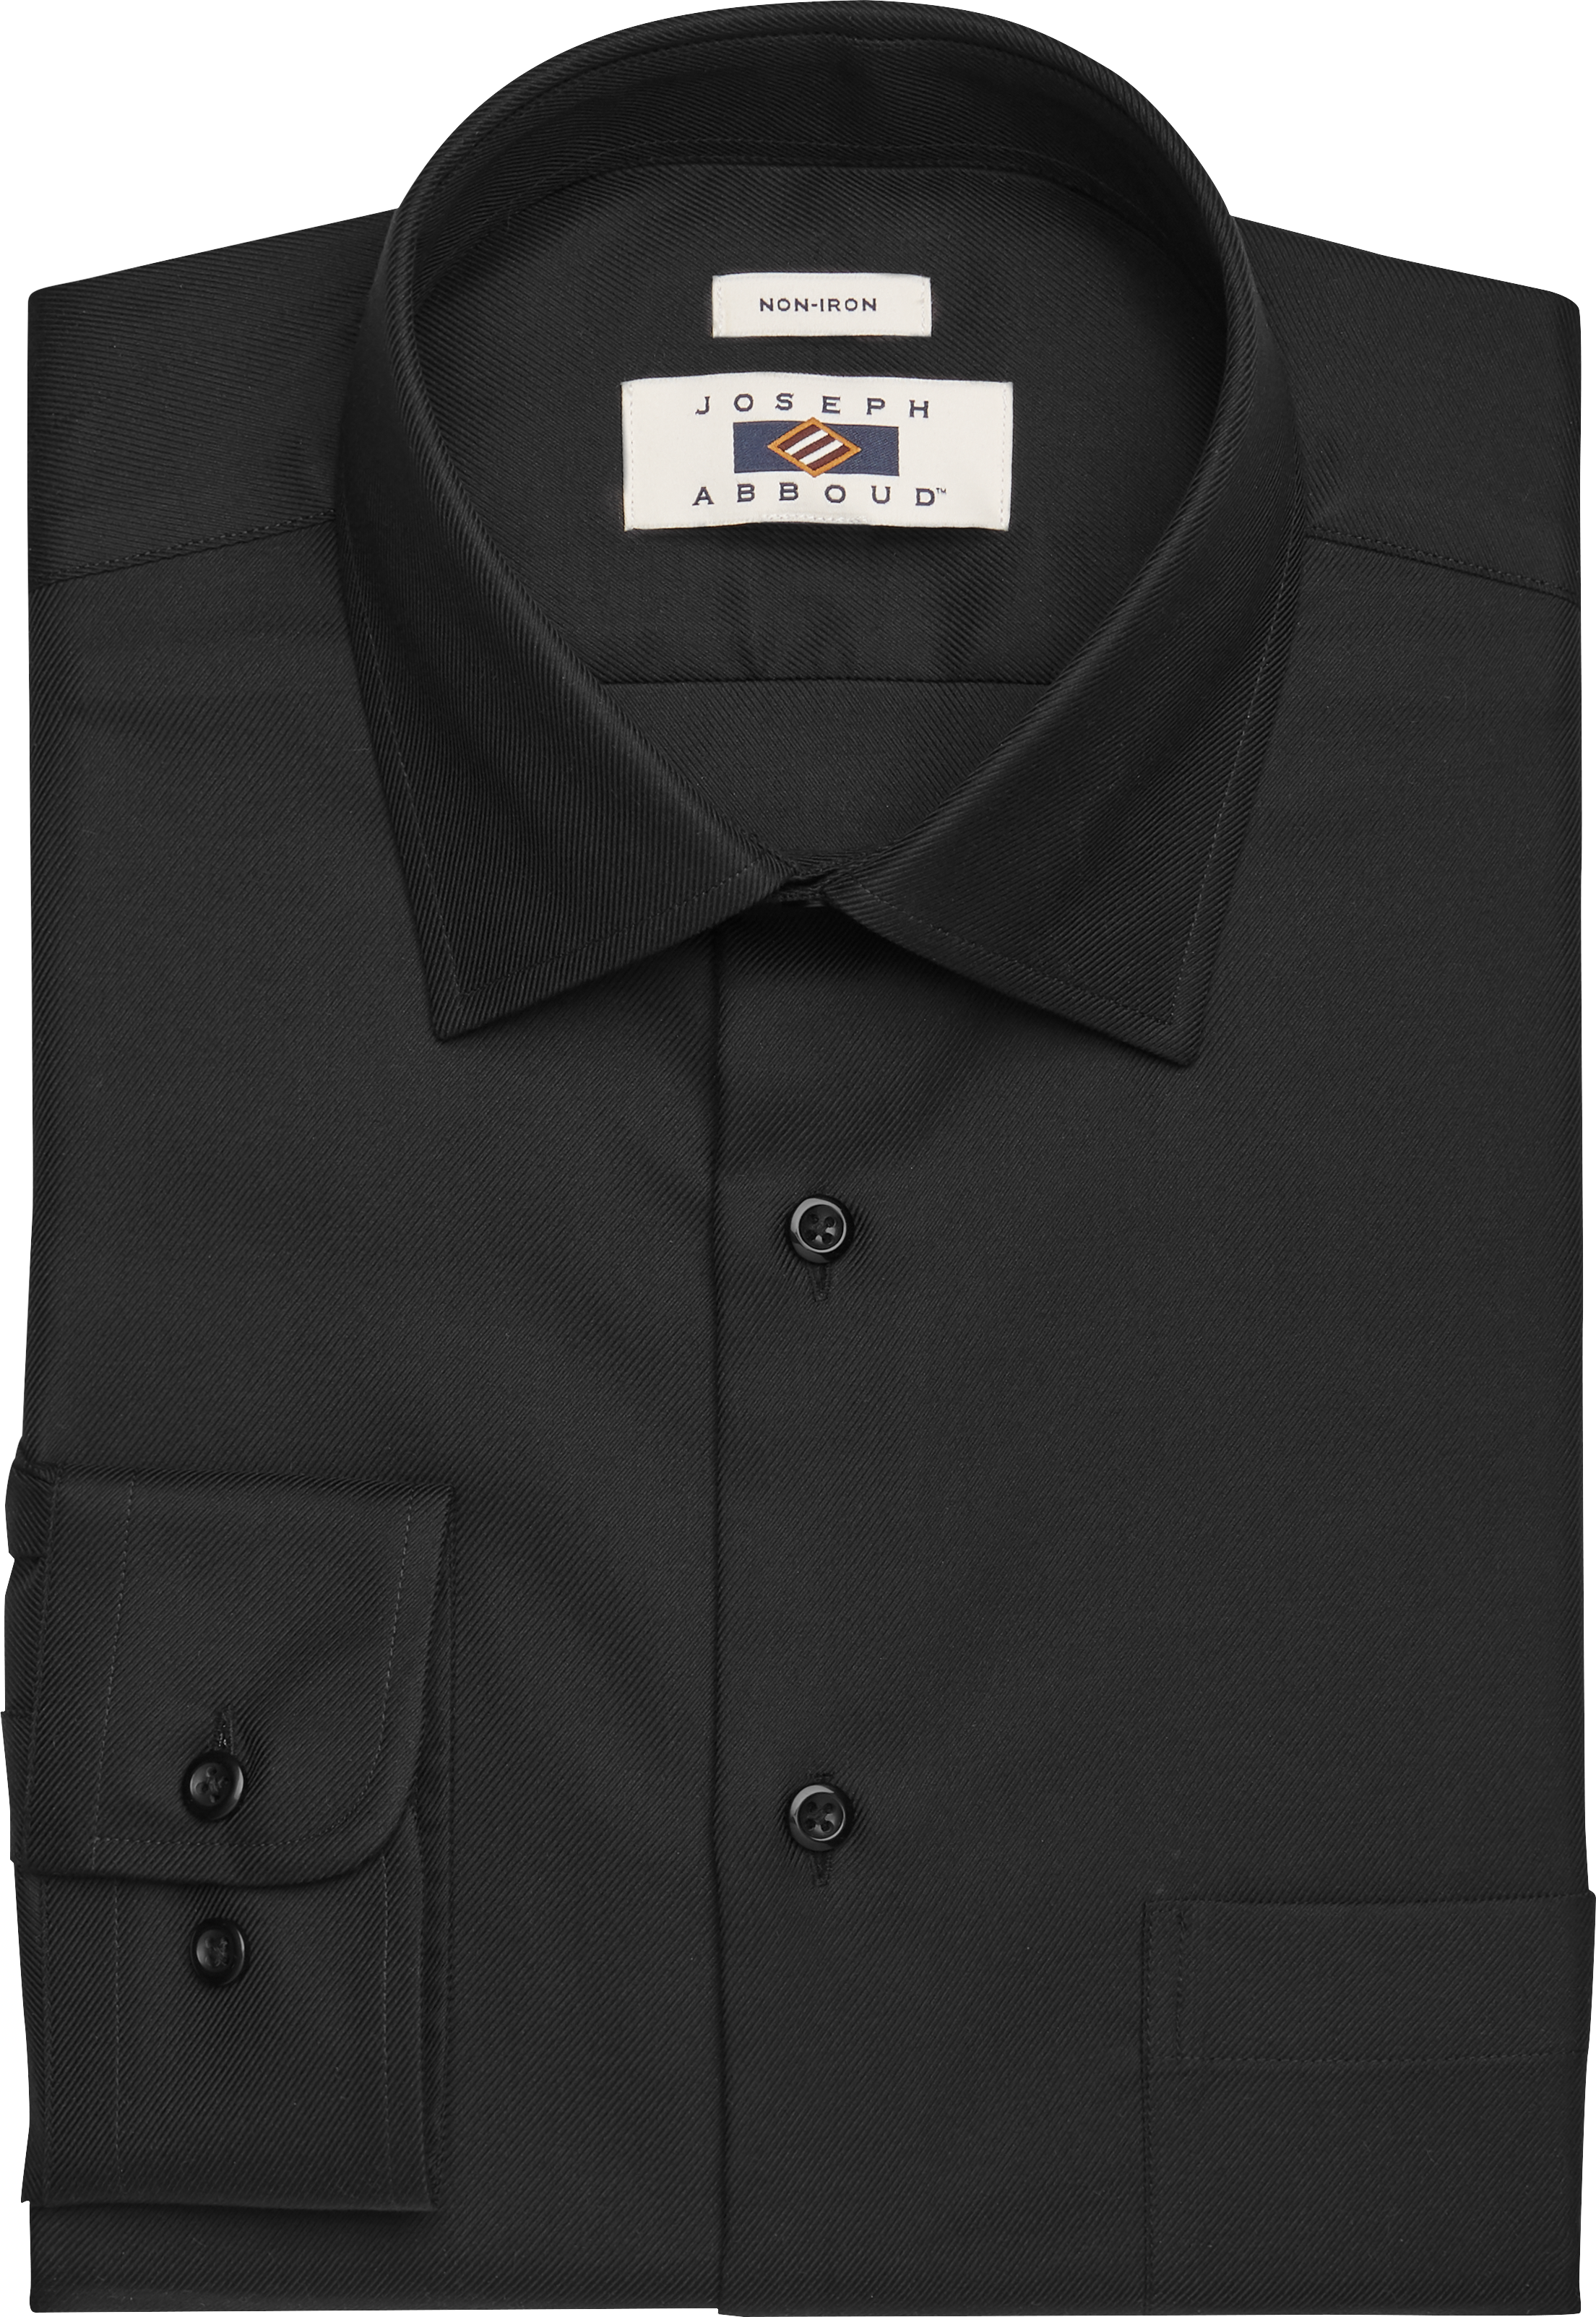 Joseph Abboud Black Twill Modern Fit Dress Shirt - Men's Shirts | Men's ...